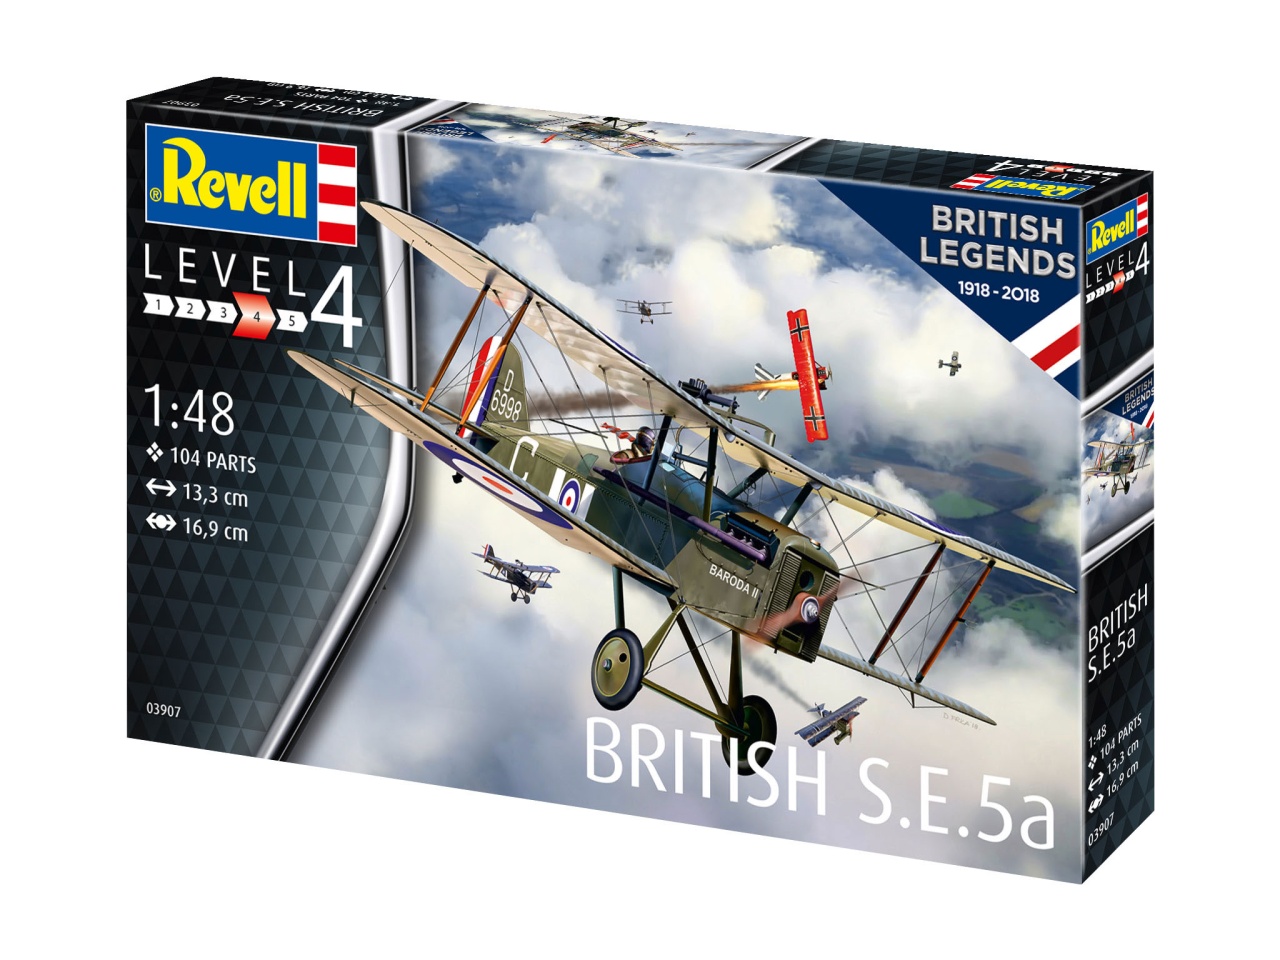 Revell 03907 British Legends British S. E.5a 1:48